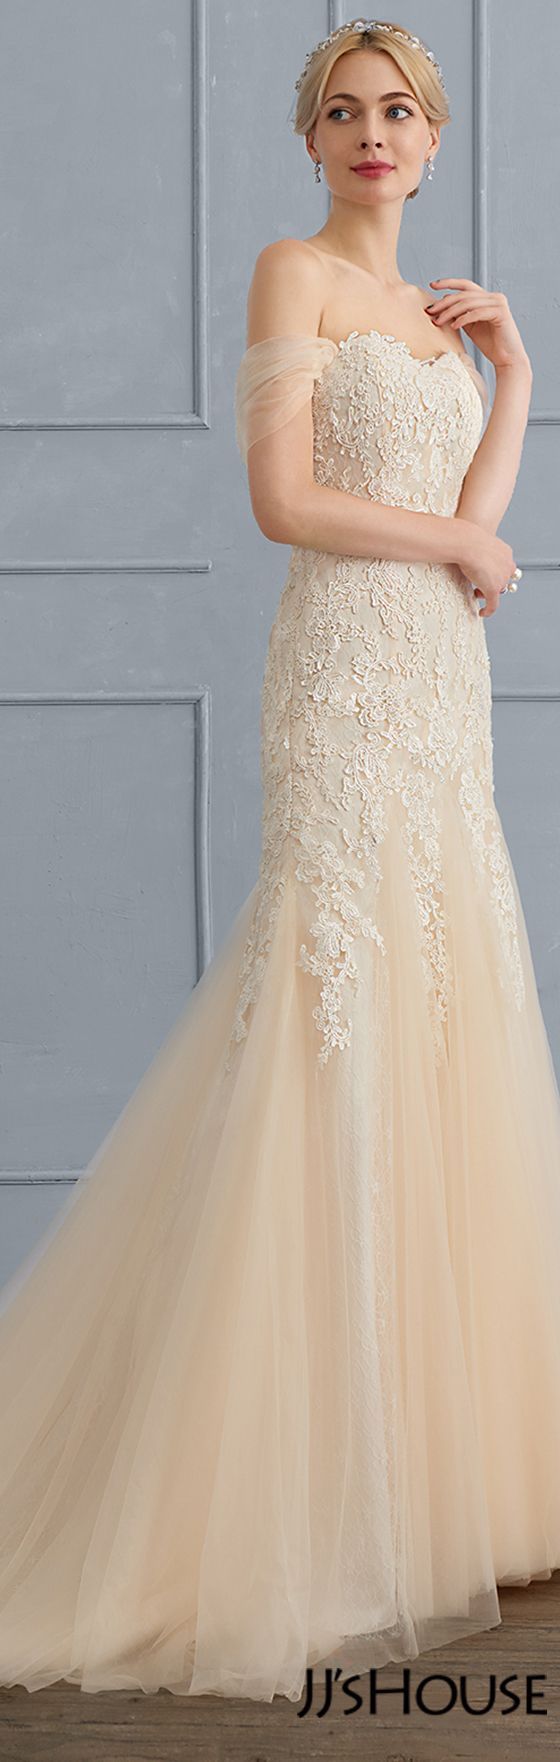 Wedding - Trumpet/Mermaid Sweetheart Sweep Train Tulle Lace Wedding Dress (002107839)